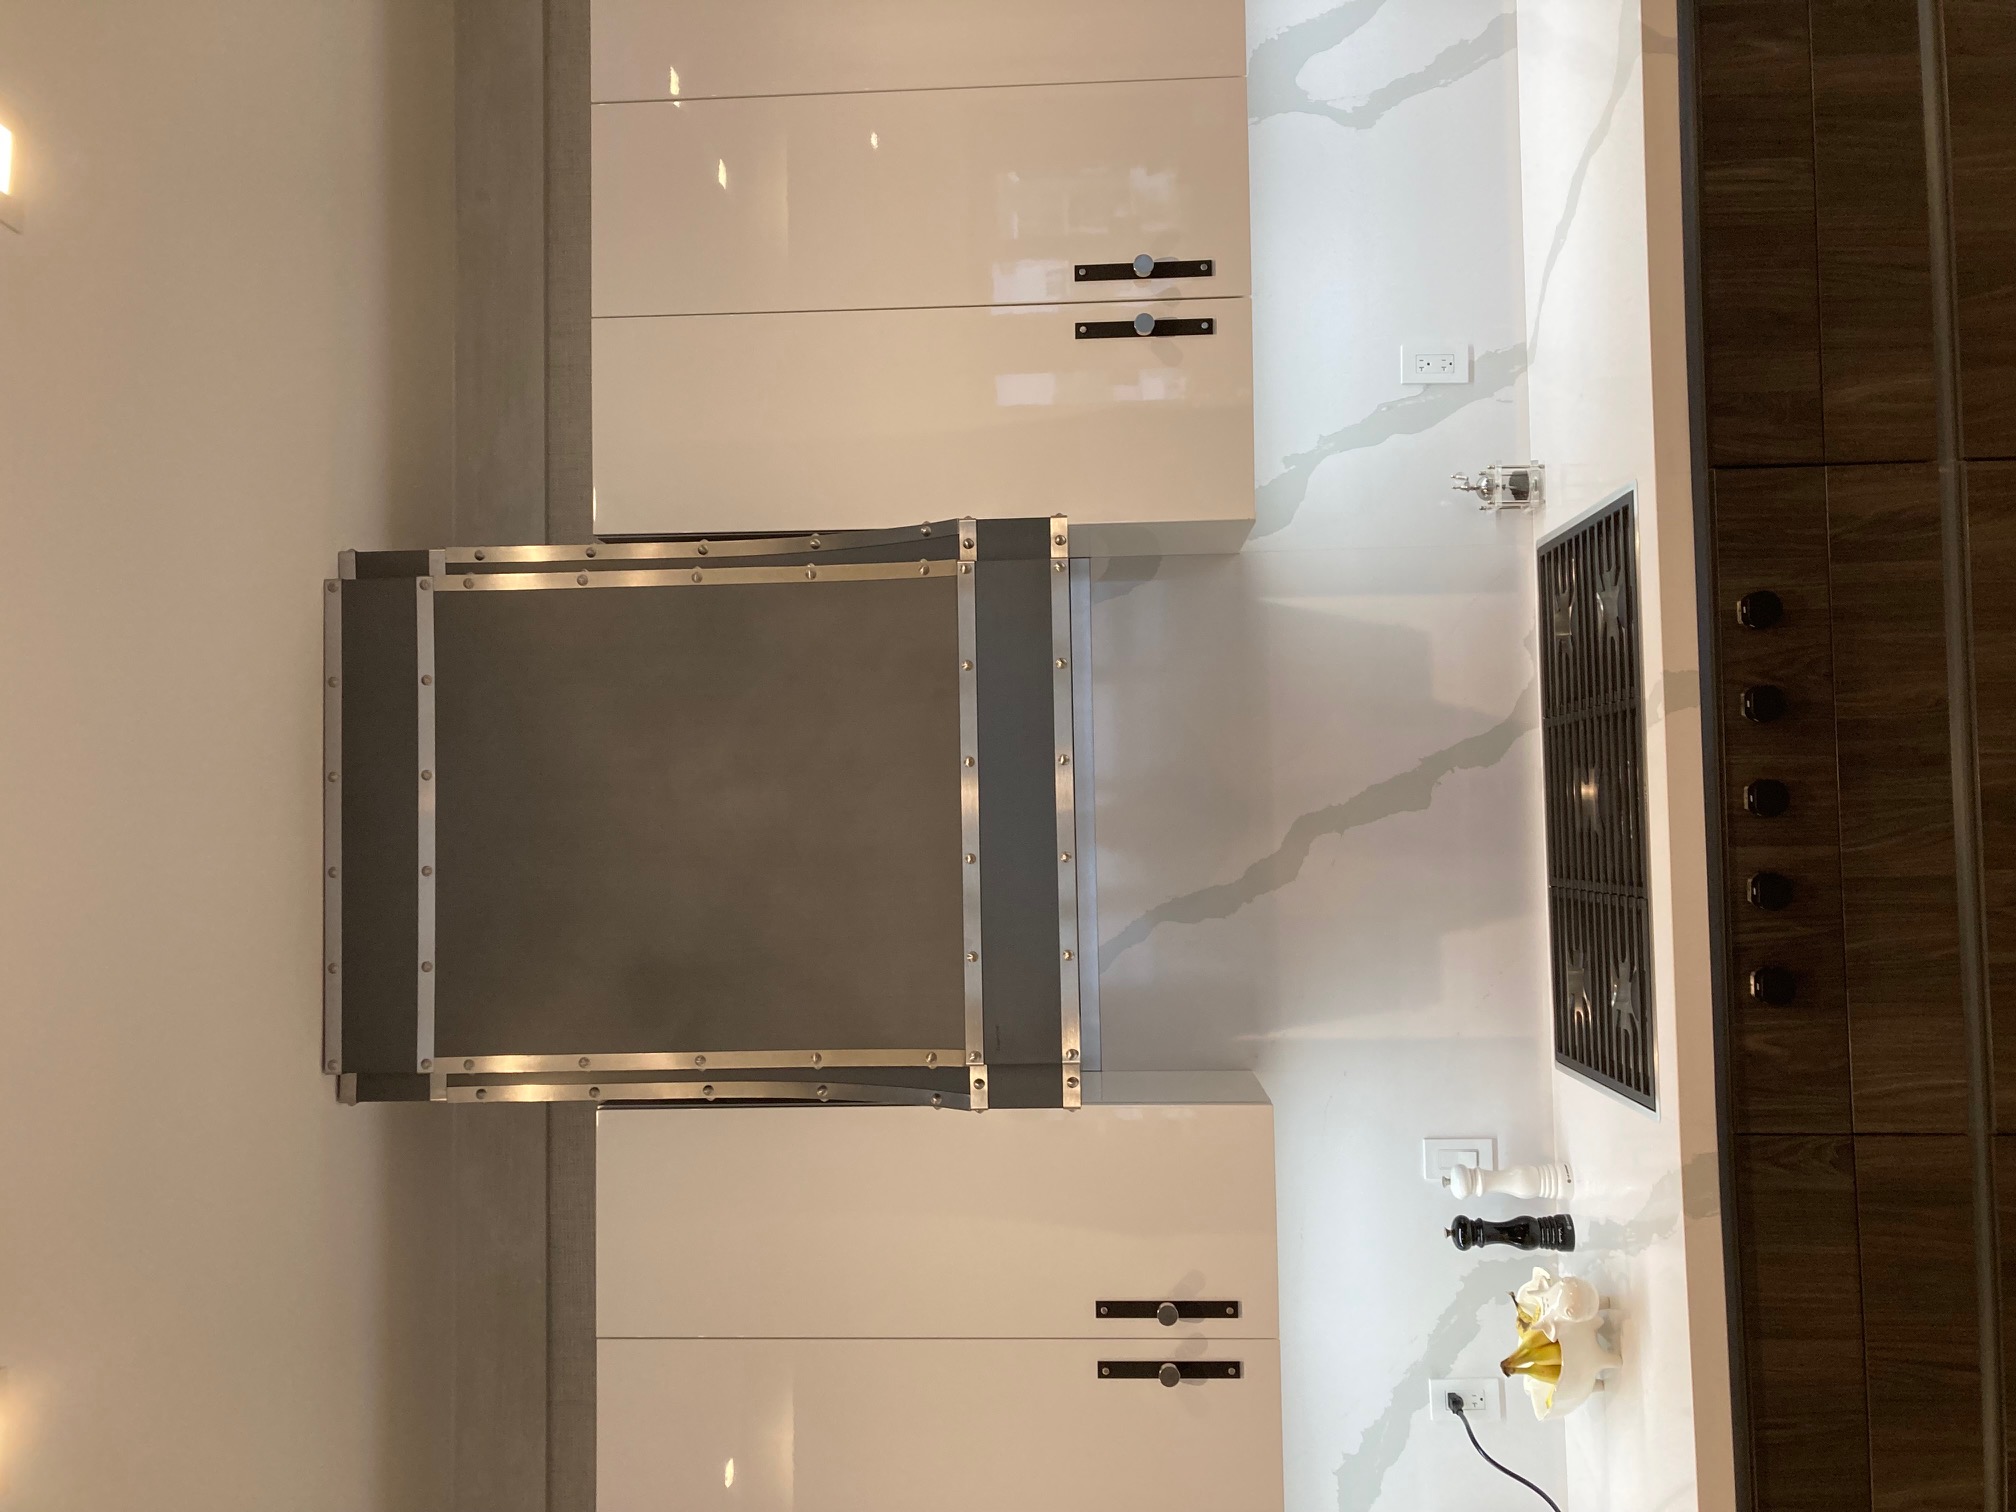 Rustic kitchen inspiration with a range of hood idea, charming white kitchen cabinets, elegant white kitchen countertops, marble backsplash